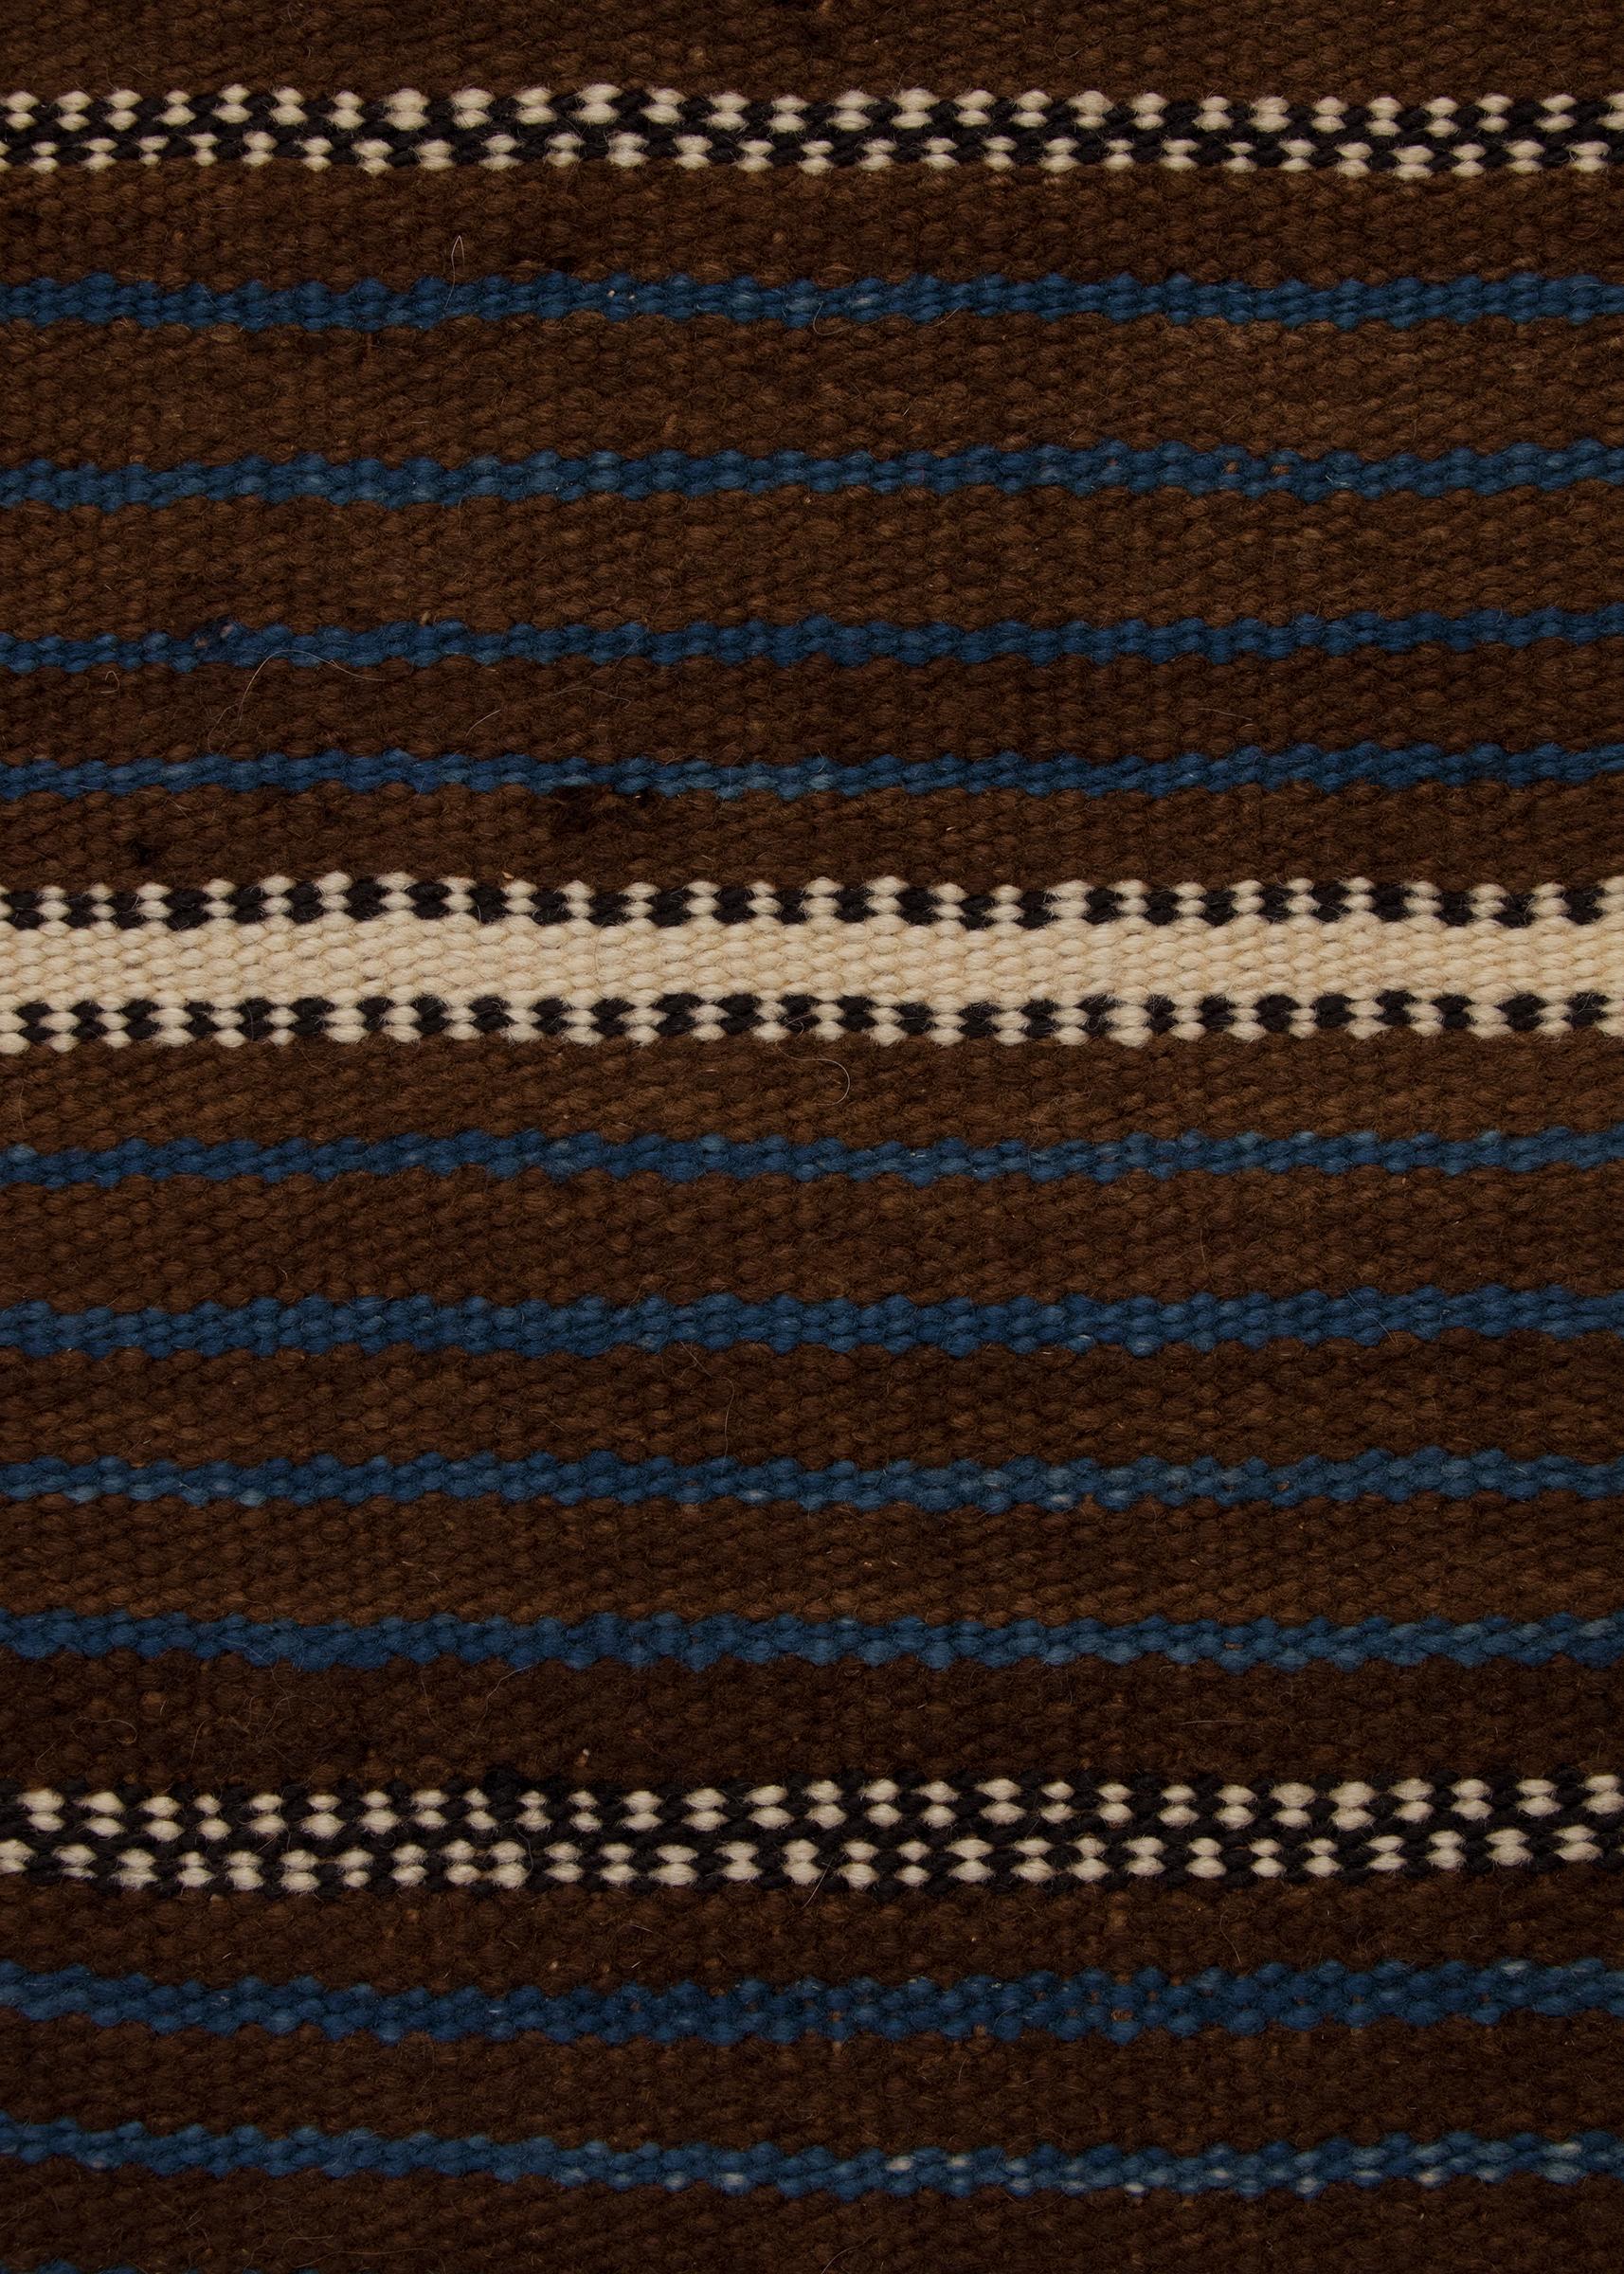 Antique Zuni Pueblo Native American Wool Blanket Moki Pattern, Brown Blue White In Good Condition For Sale In Denver, CO